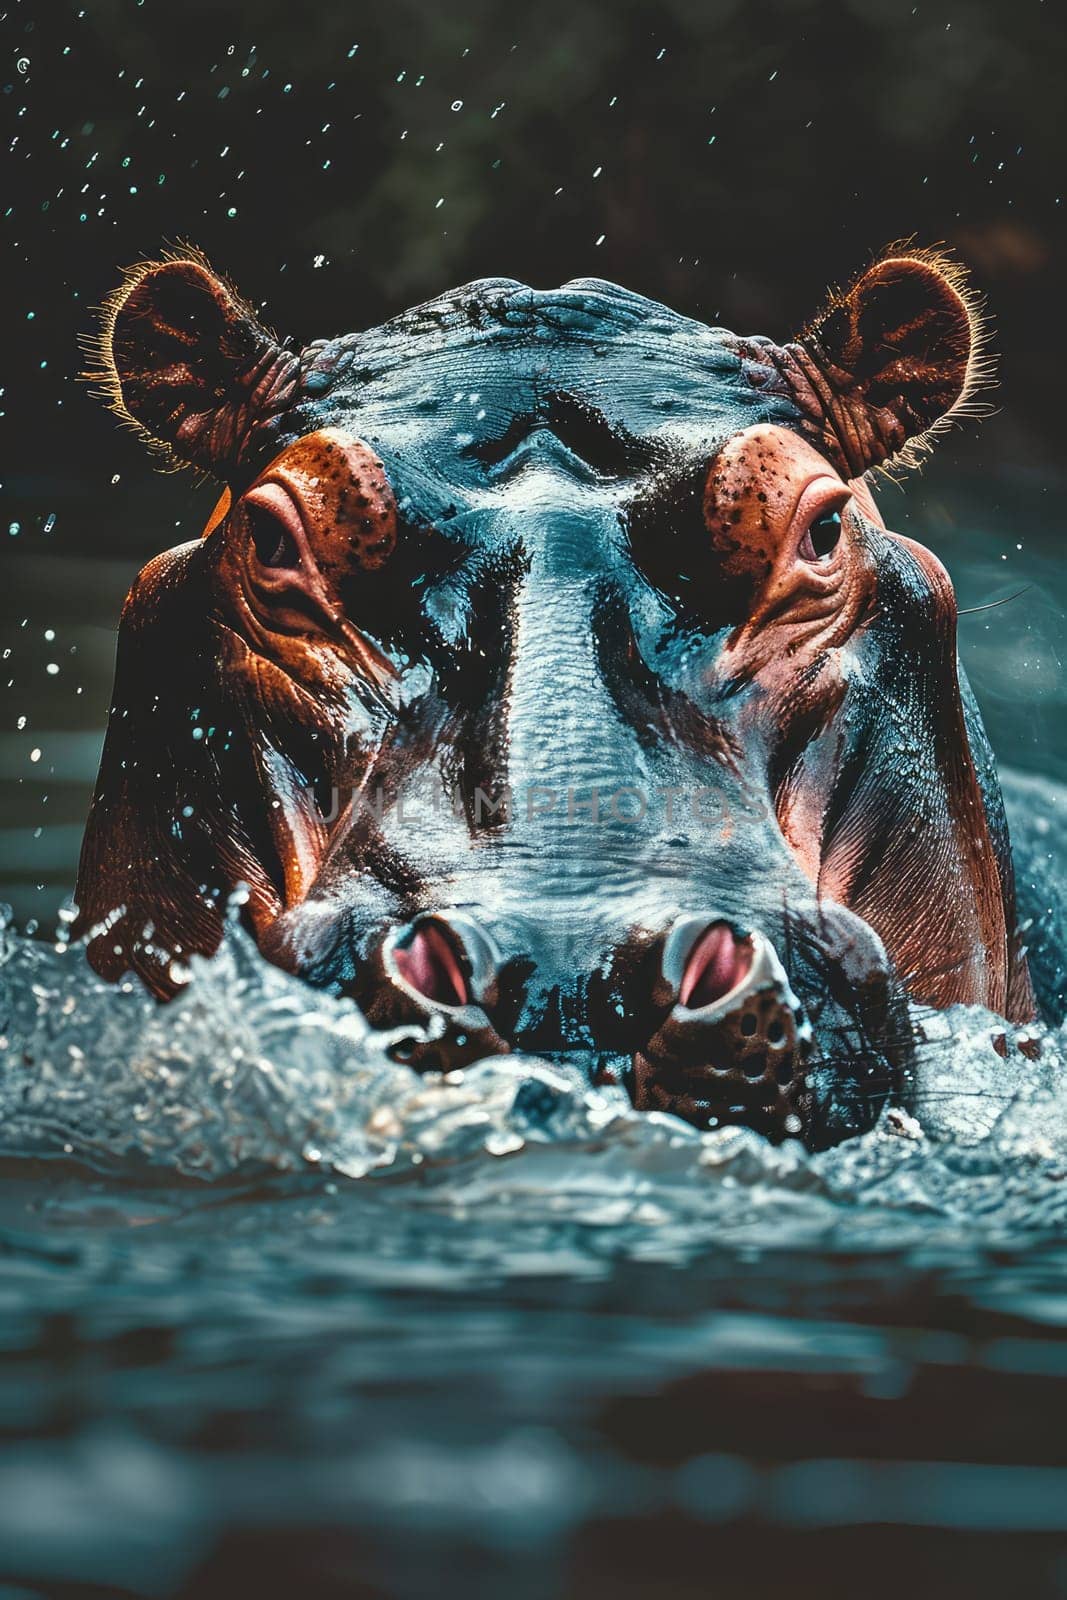 Large hippopotamus in the water. Selective focus. Nature.